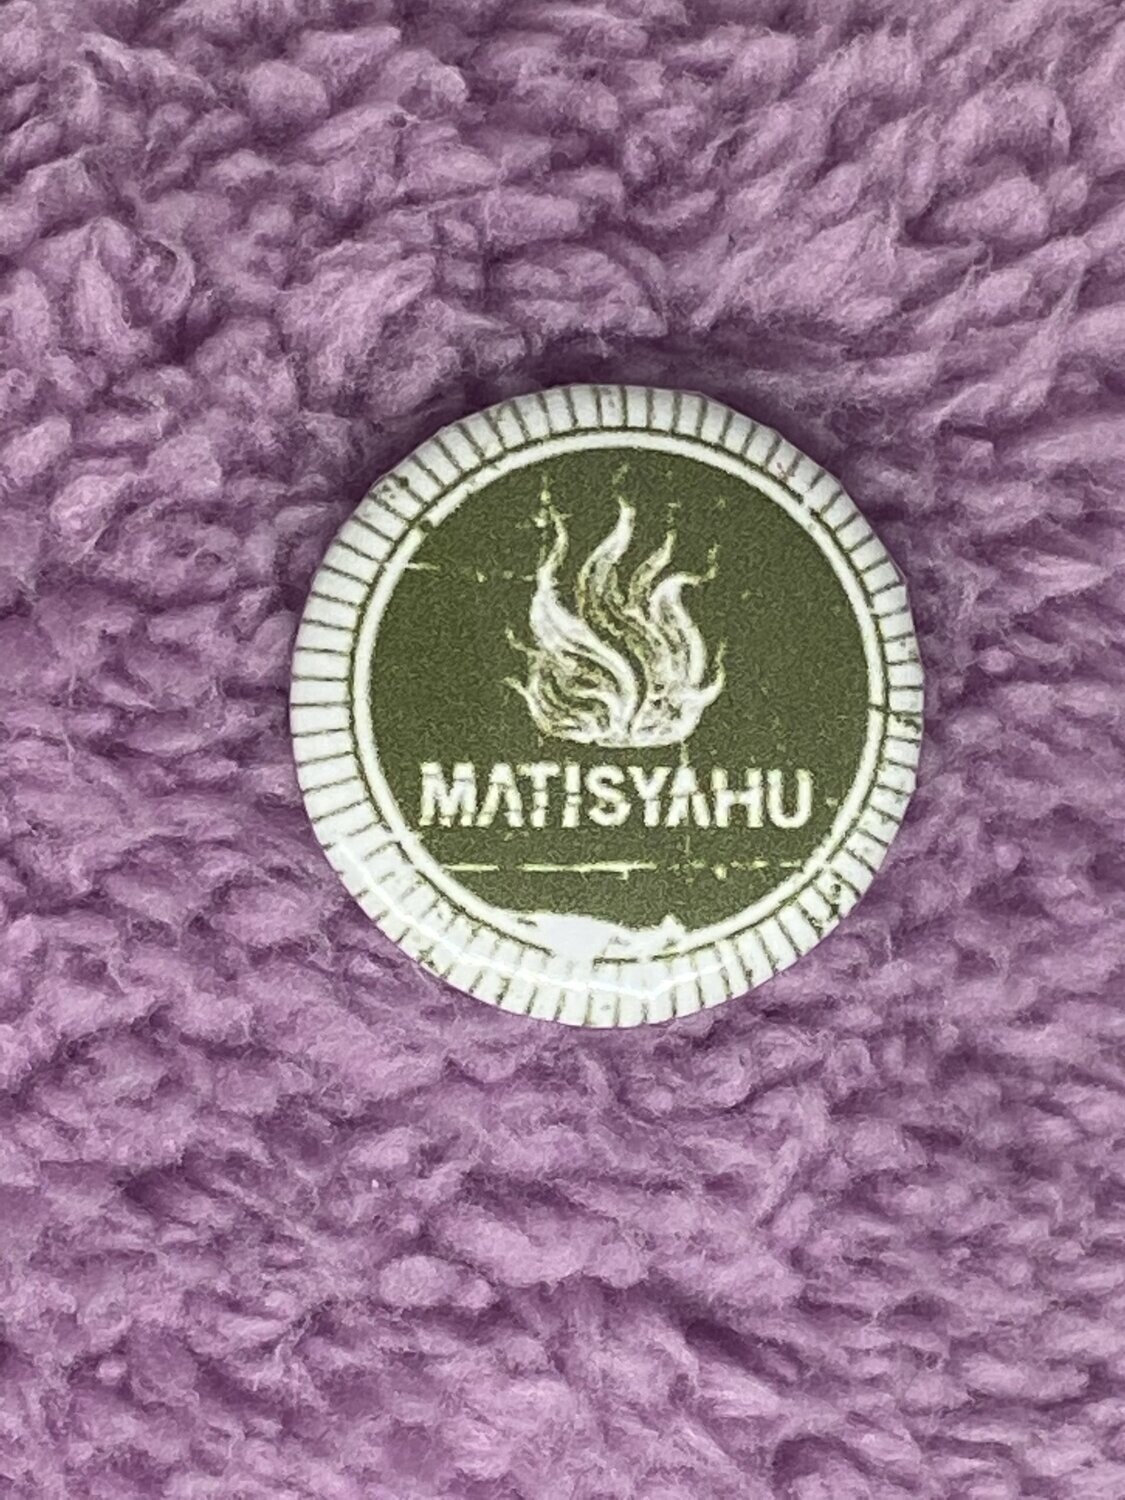 Matisyahu Badge